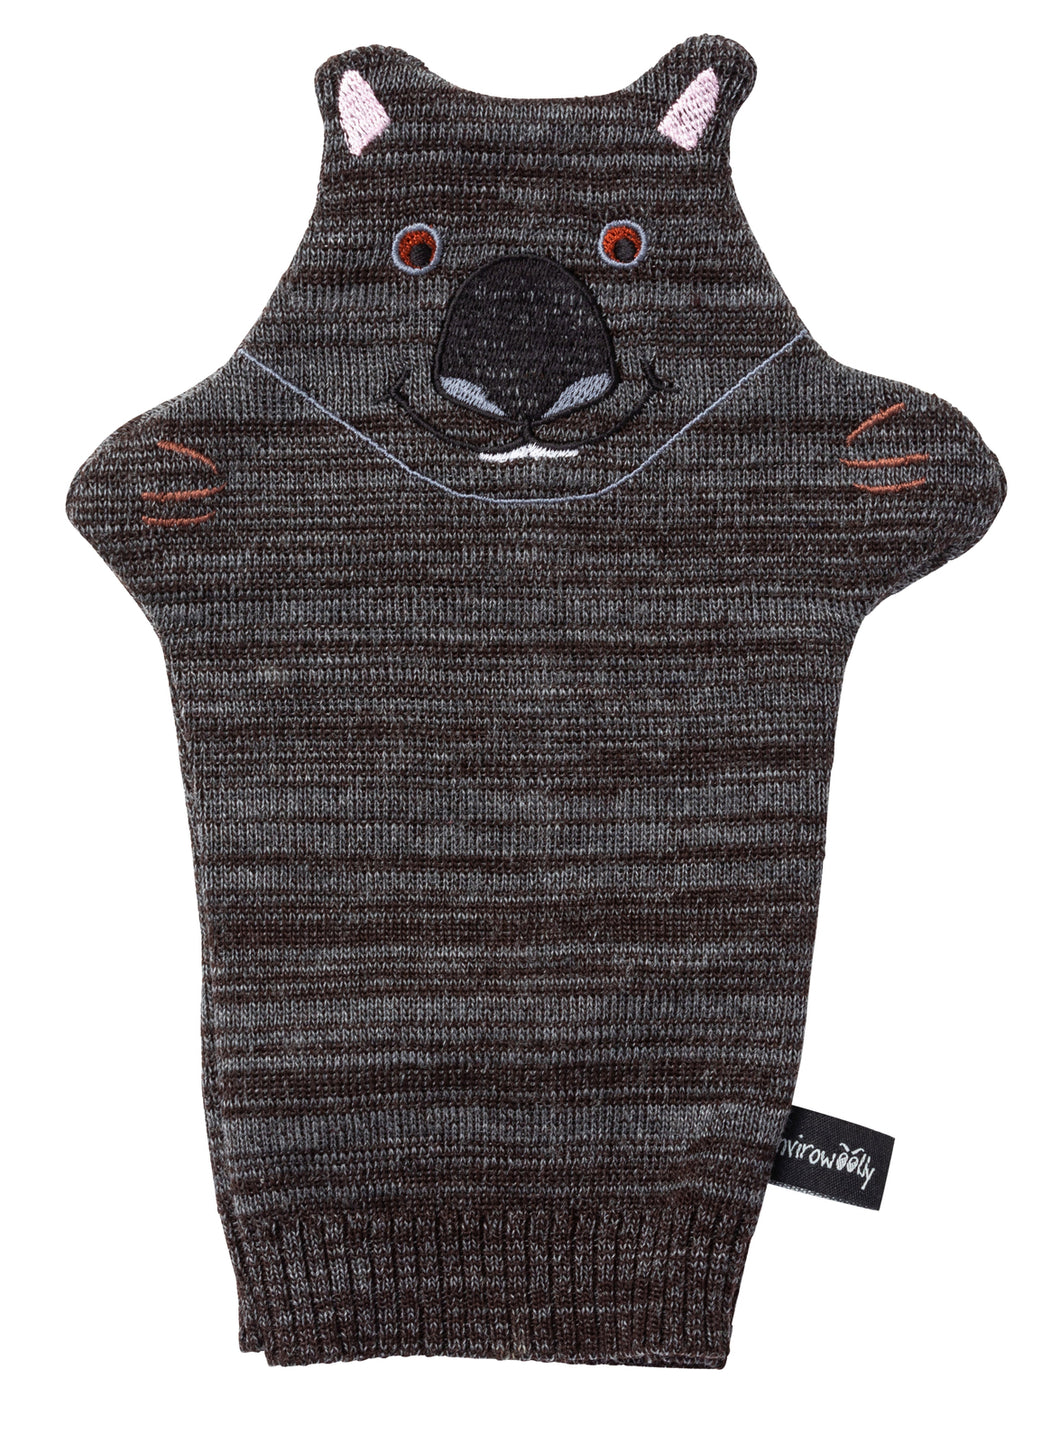 Wombat hand puppet